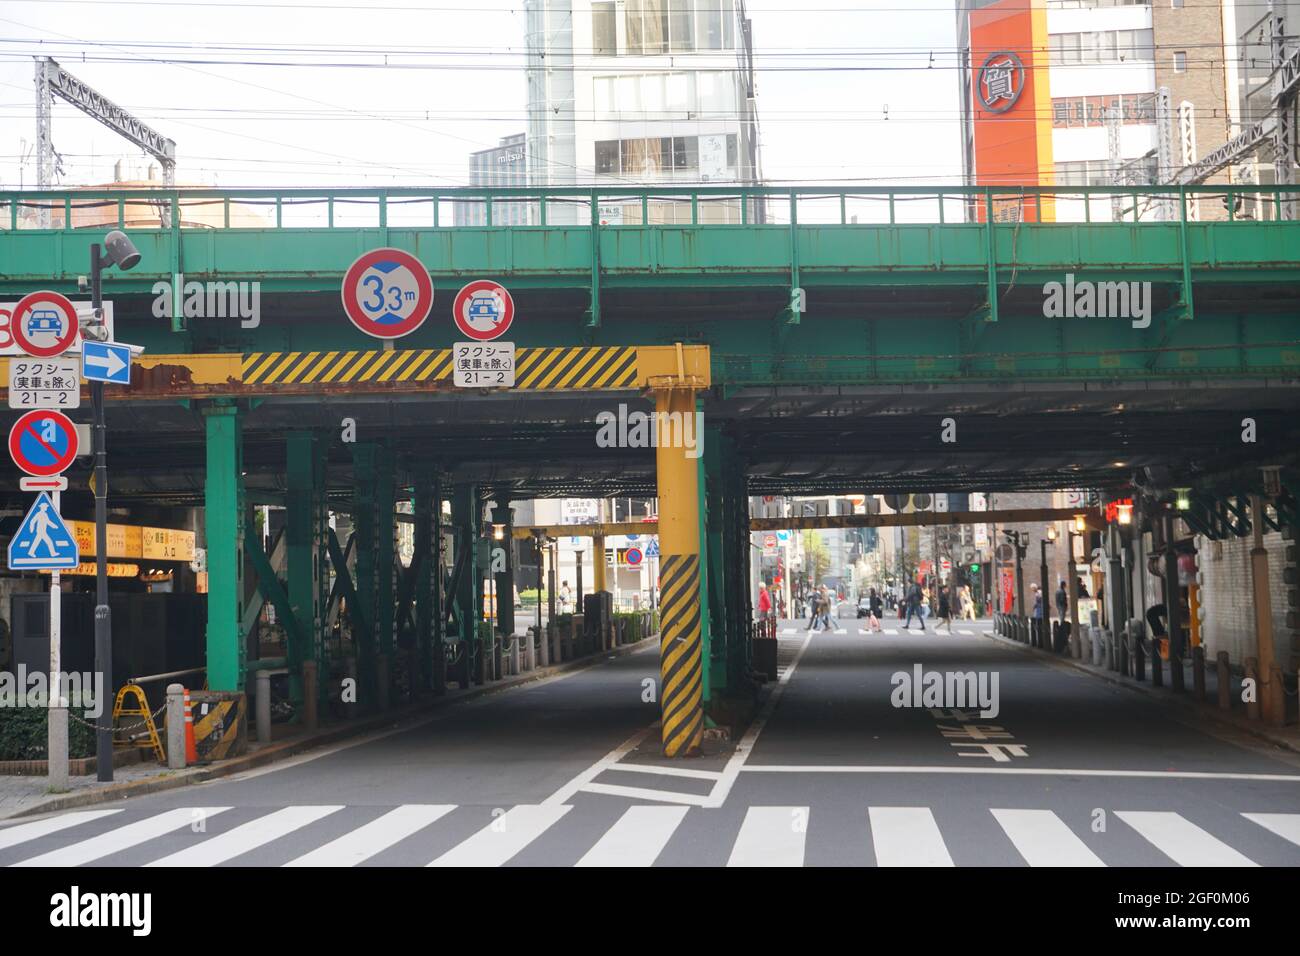 Tokyo Metro JR Yamanote Line Subway Bridge Japan Stock foto Immagini di stock immagini di stock Foto Stock